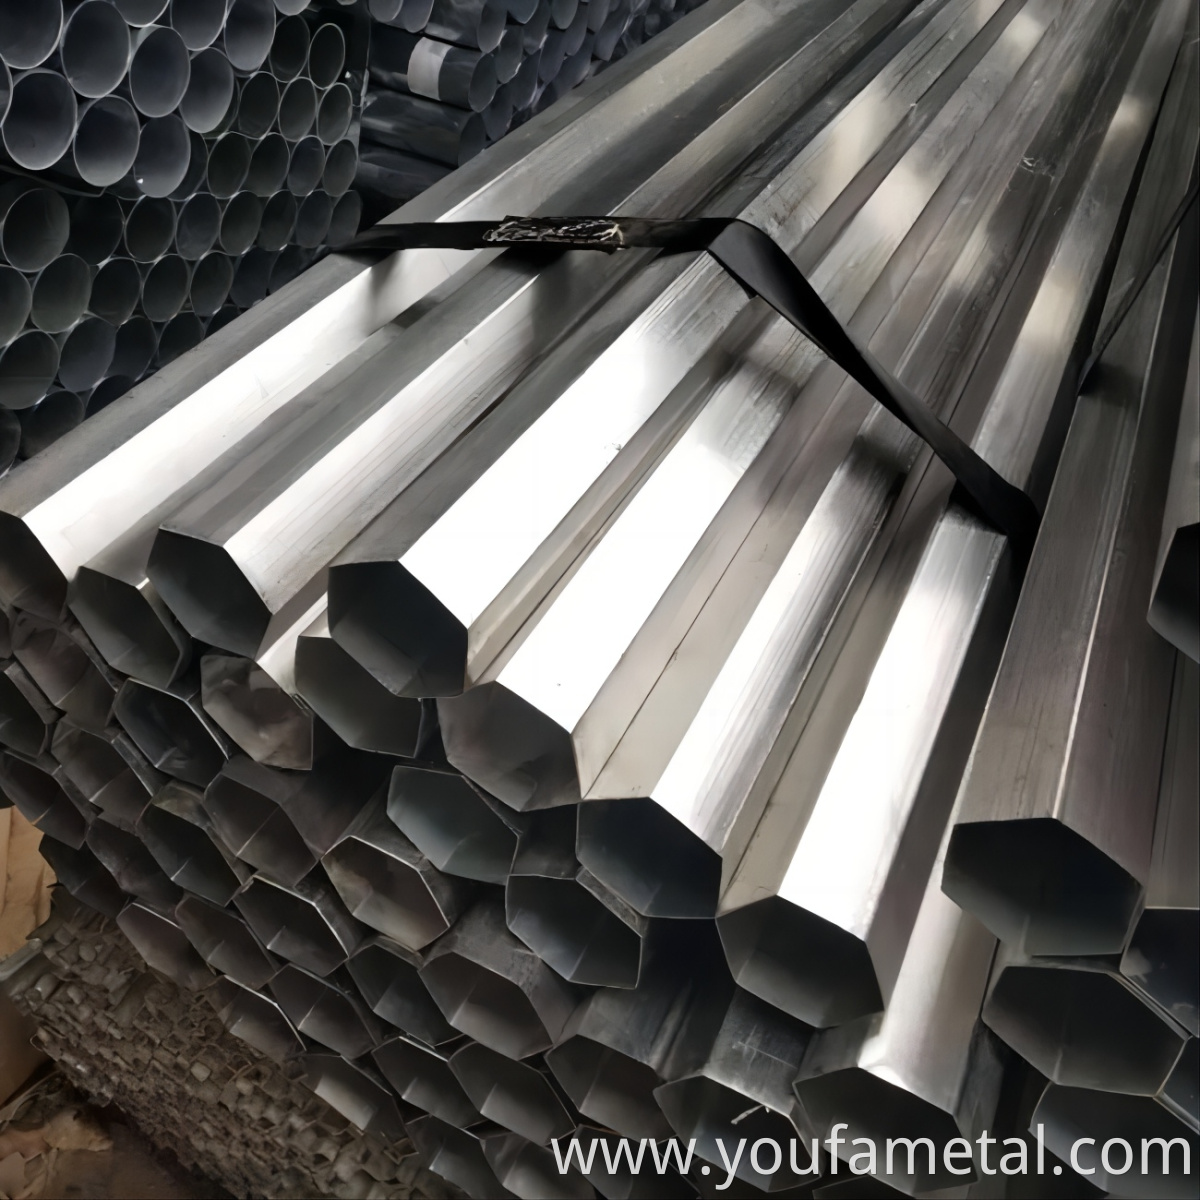 Hexagonal steel pipe